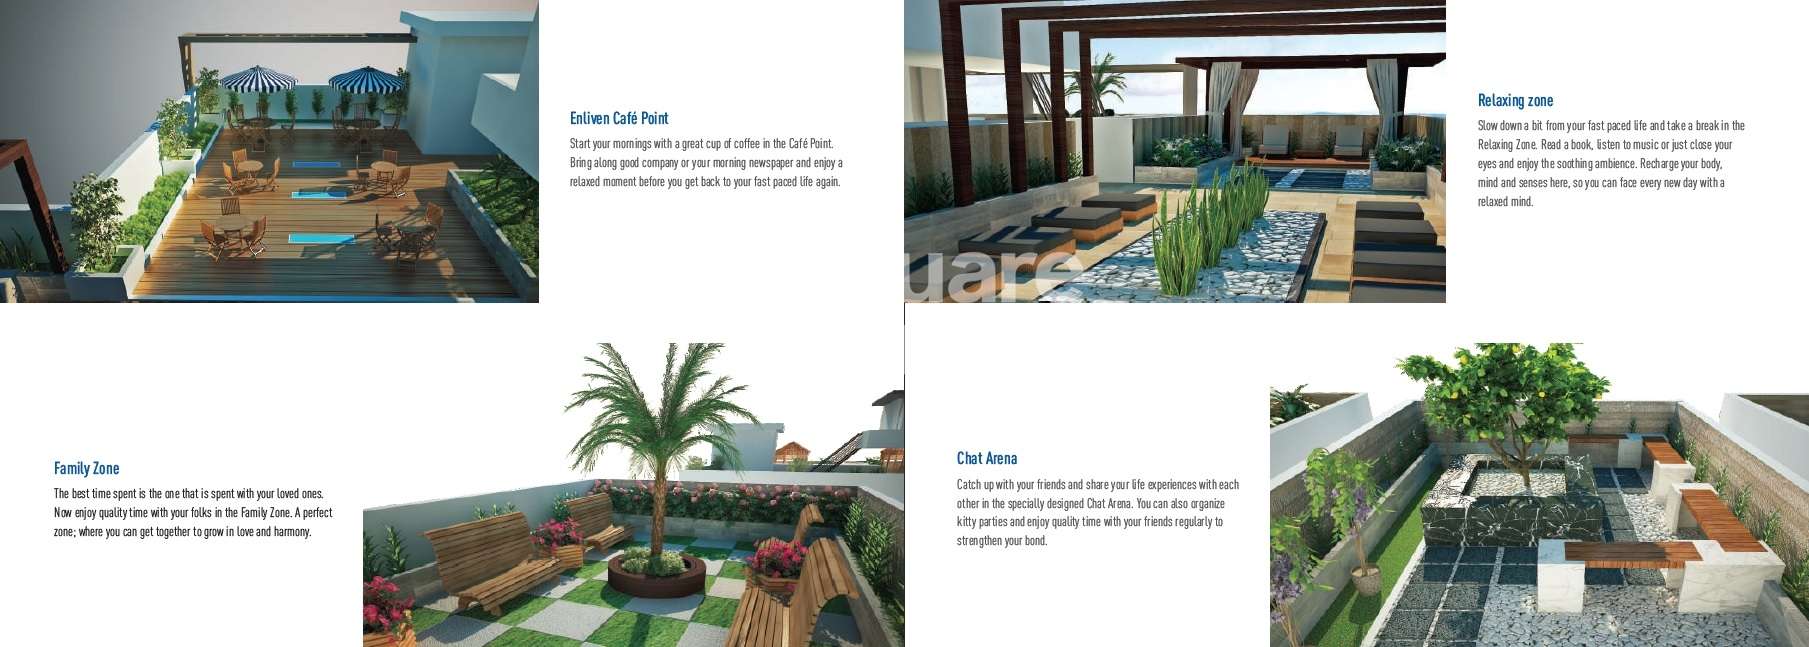 indya estates skyview project amenities features4 2679